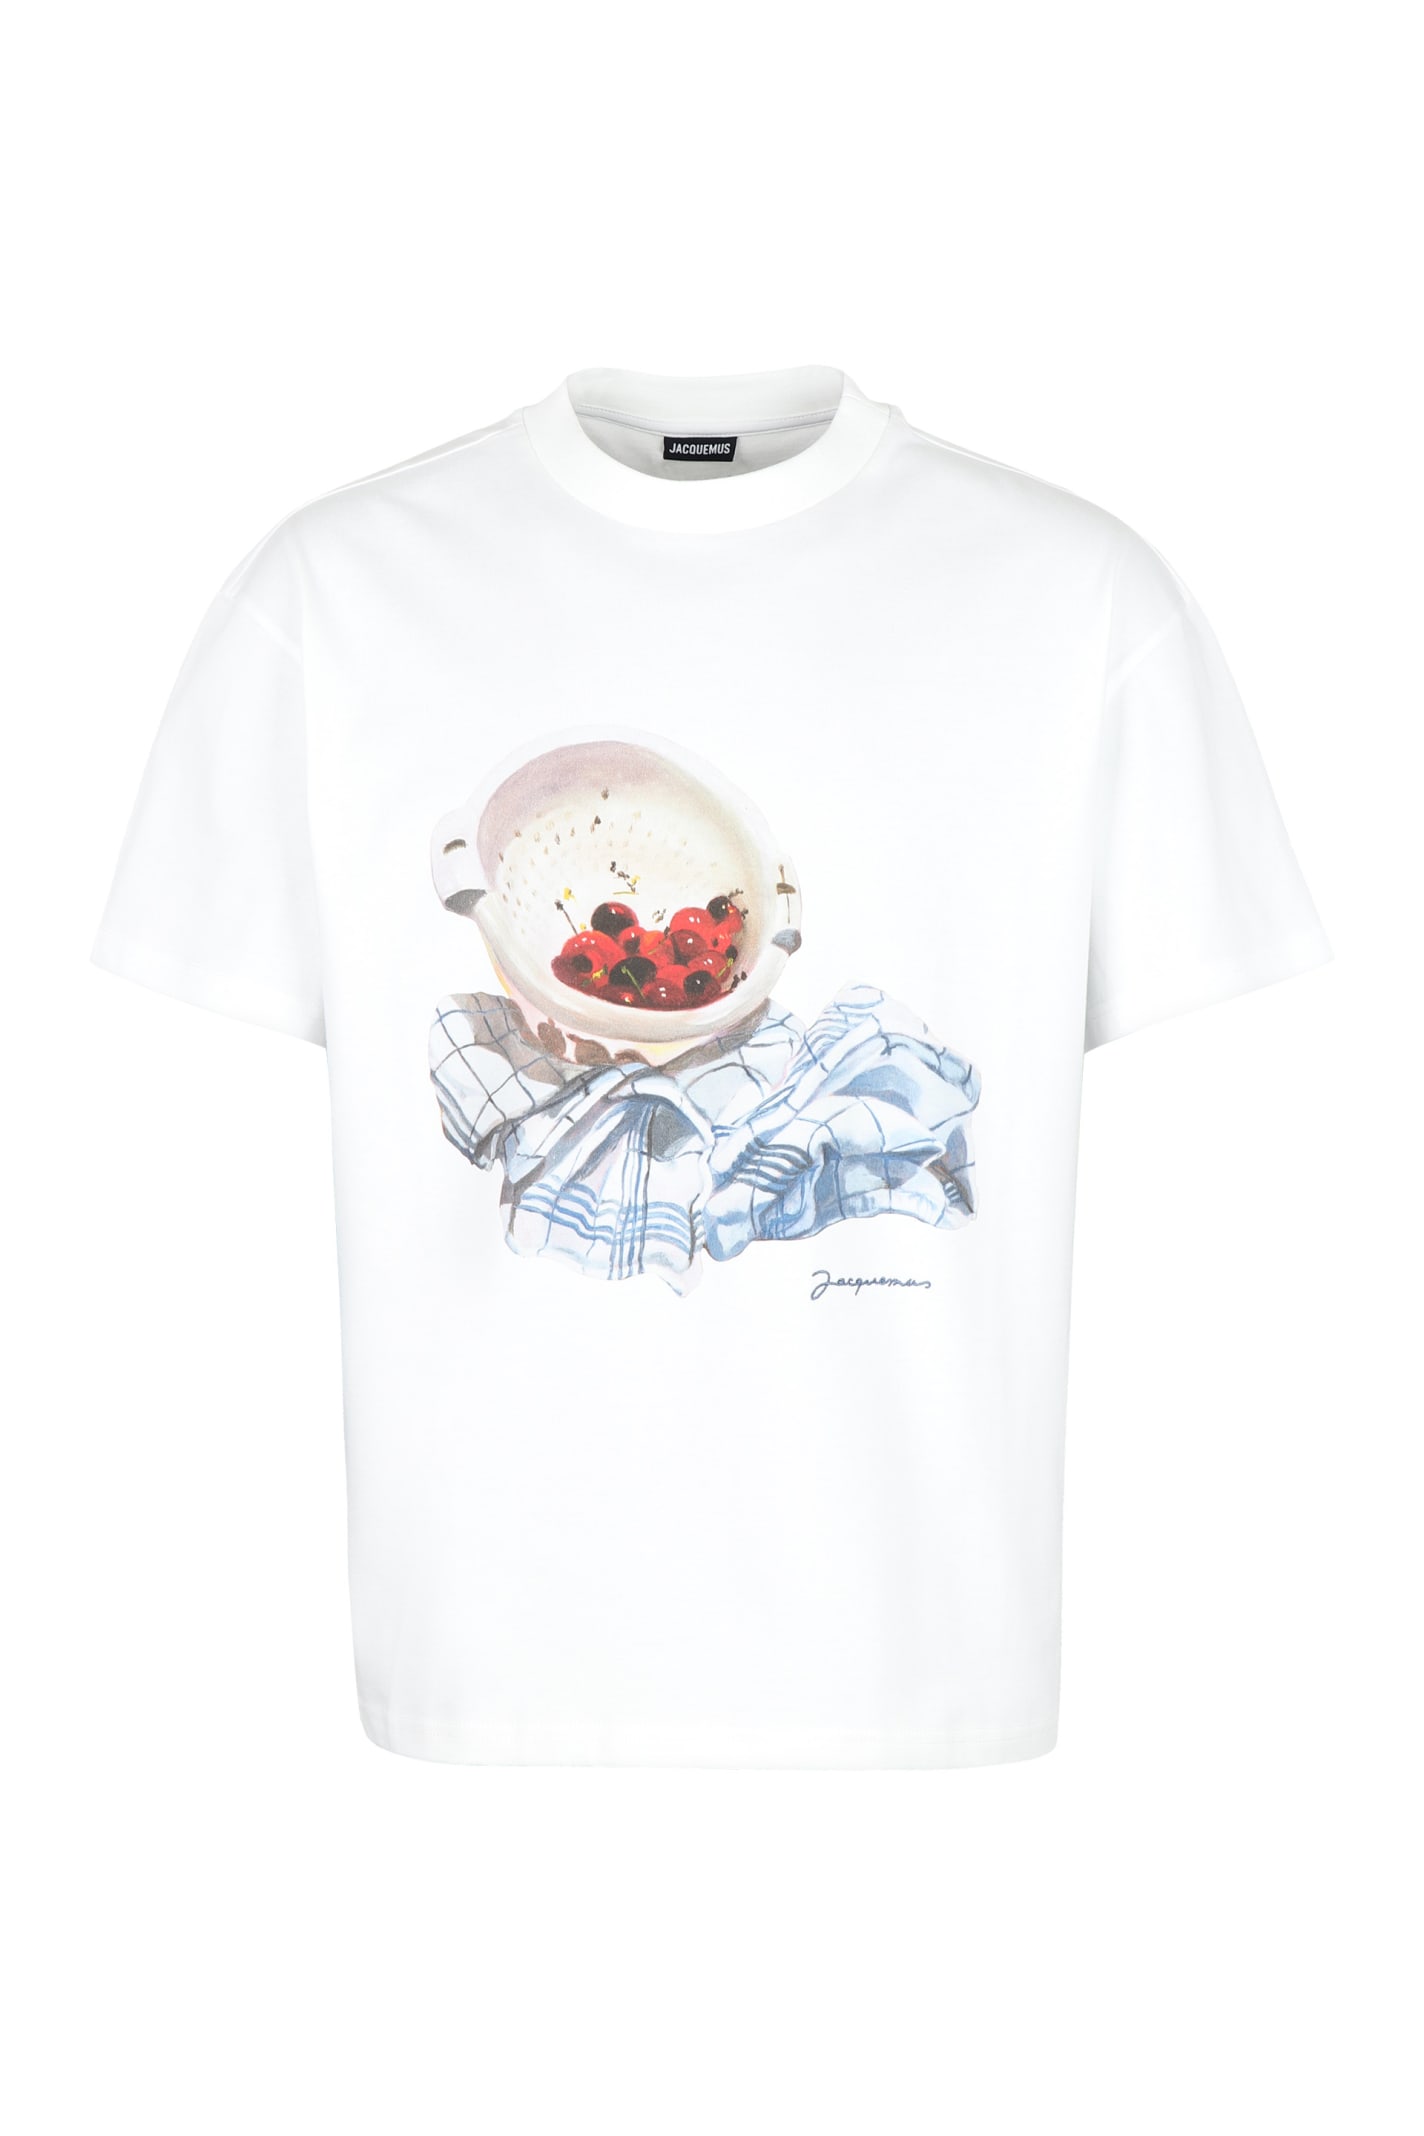 Jacquemus Cerises Printed Cotton T-shirt